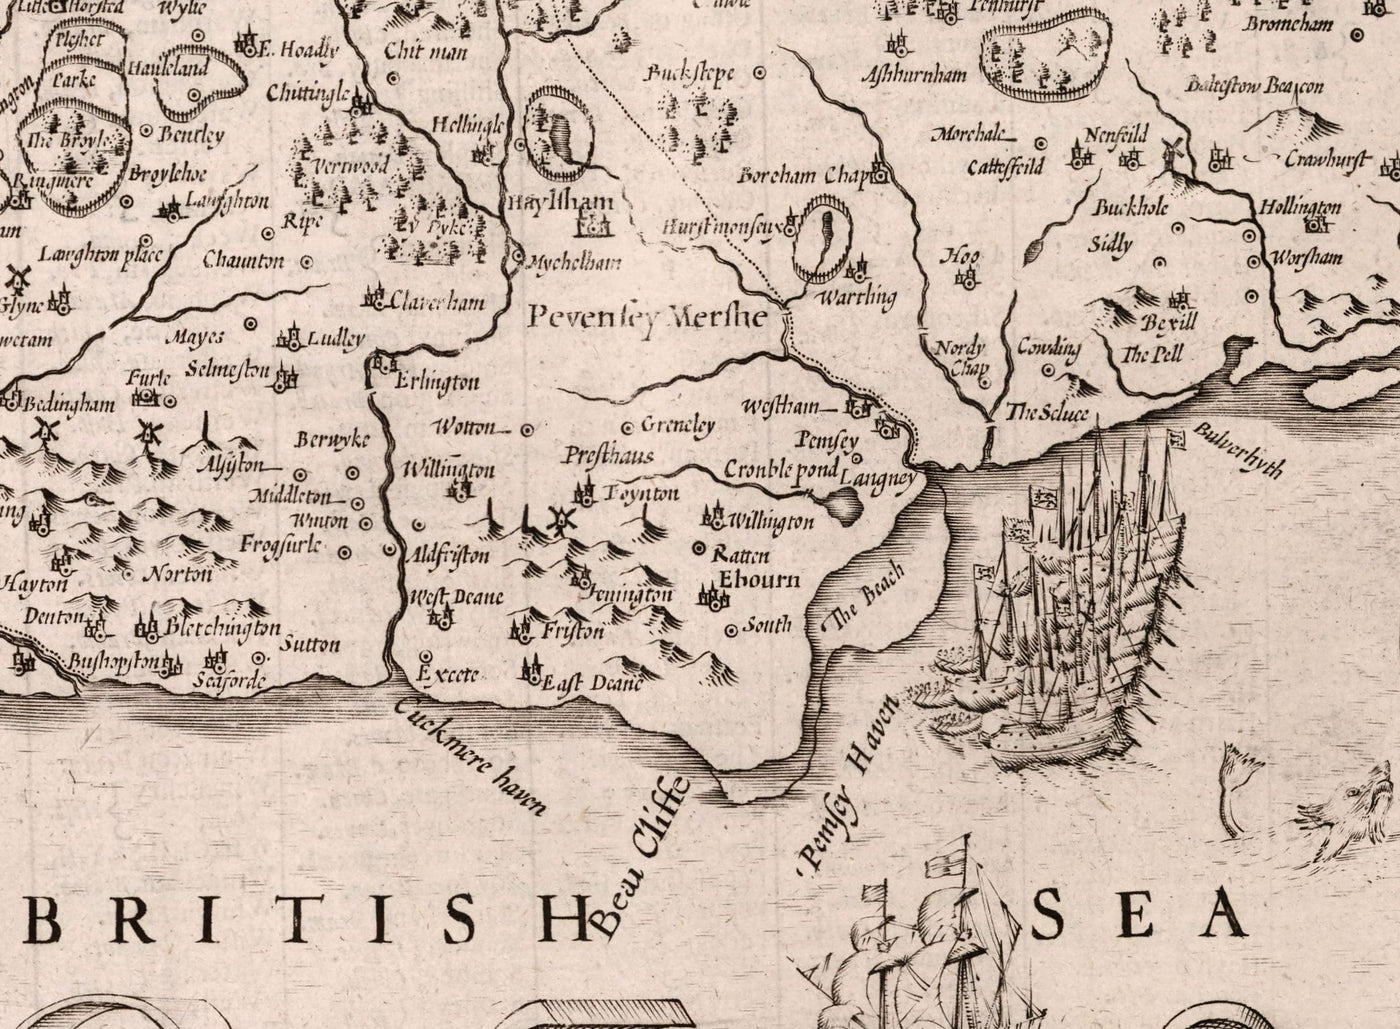 Old Map of Sussex in 1611 by John Speed - Worthing, Crawley, Brighton, Bognor, Eastbourne, Littlehampton, Horsham